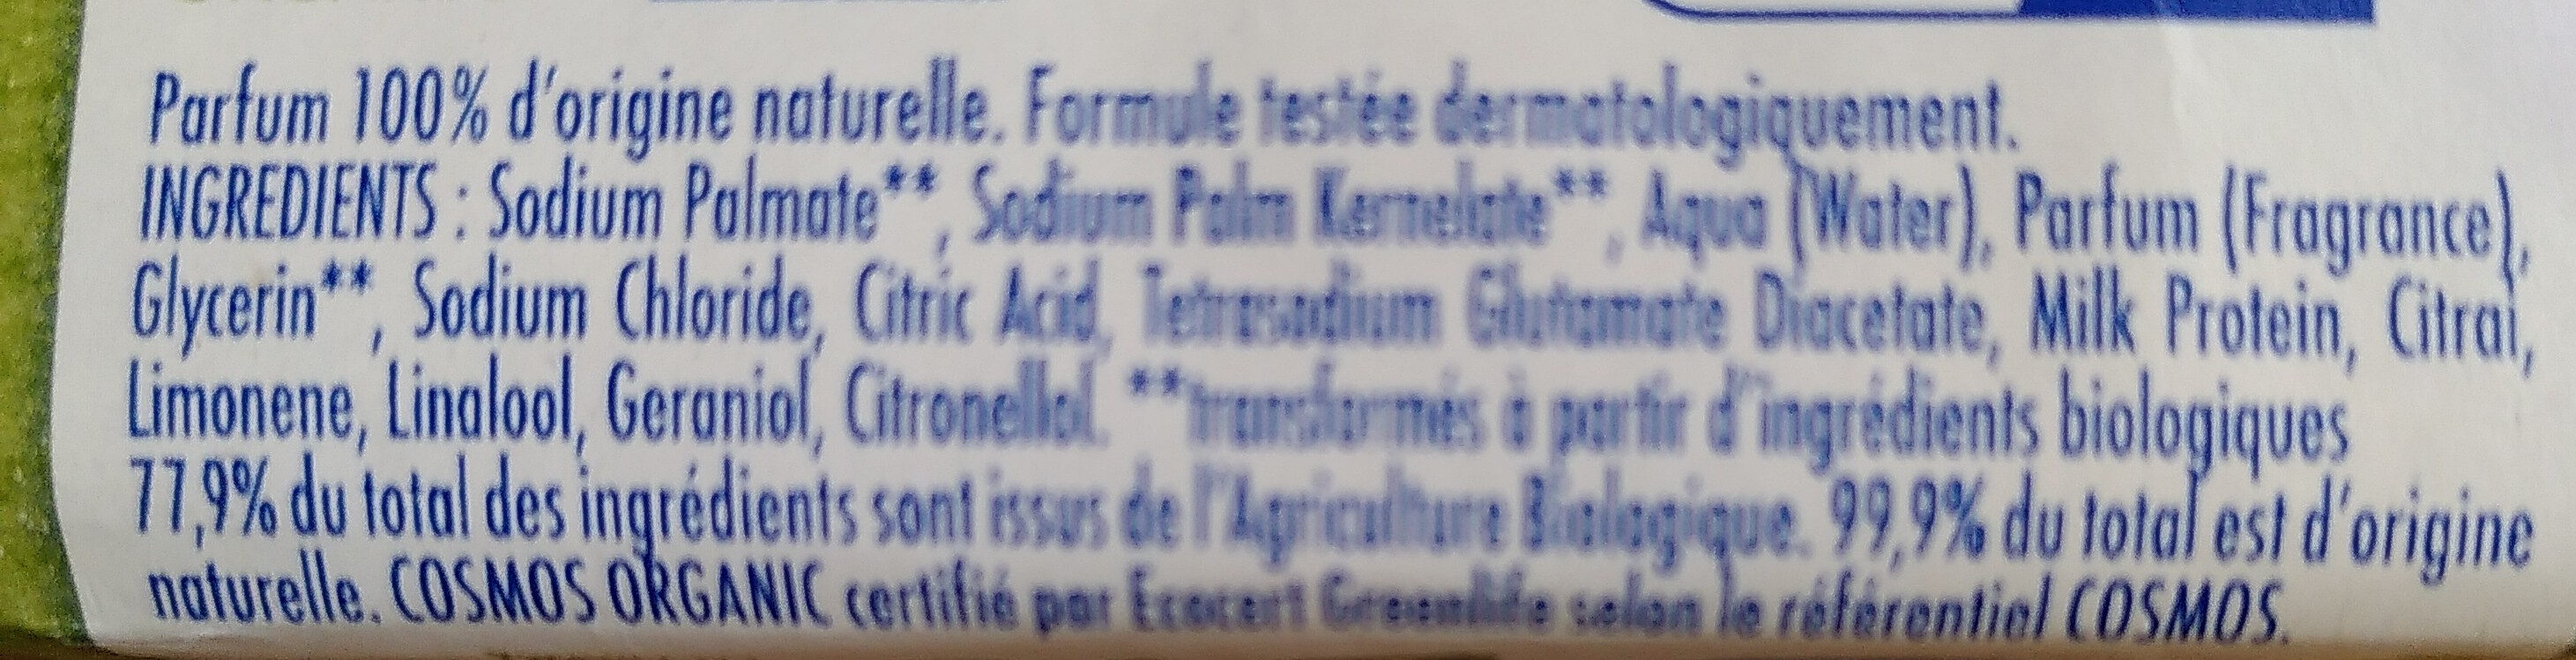 Msv pdt bio citron 100g - Ingredients - fr